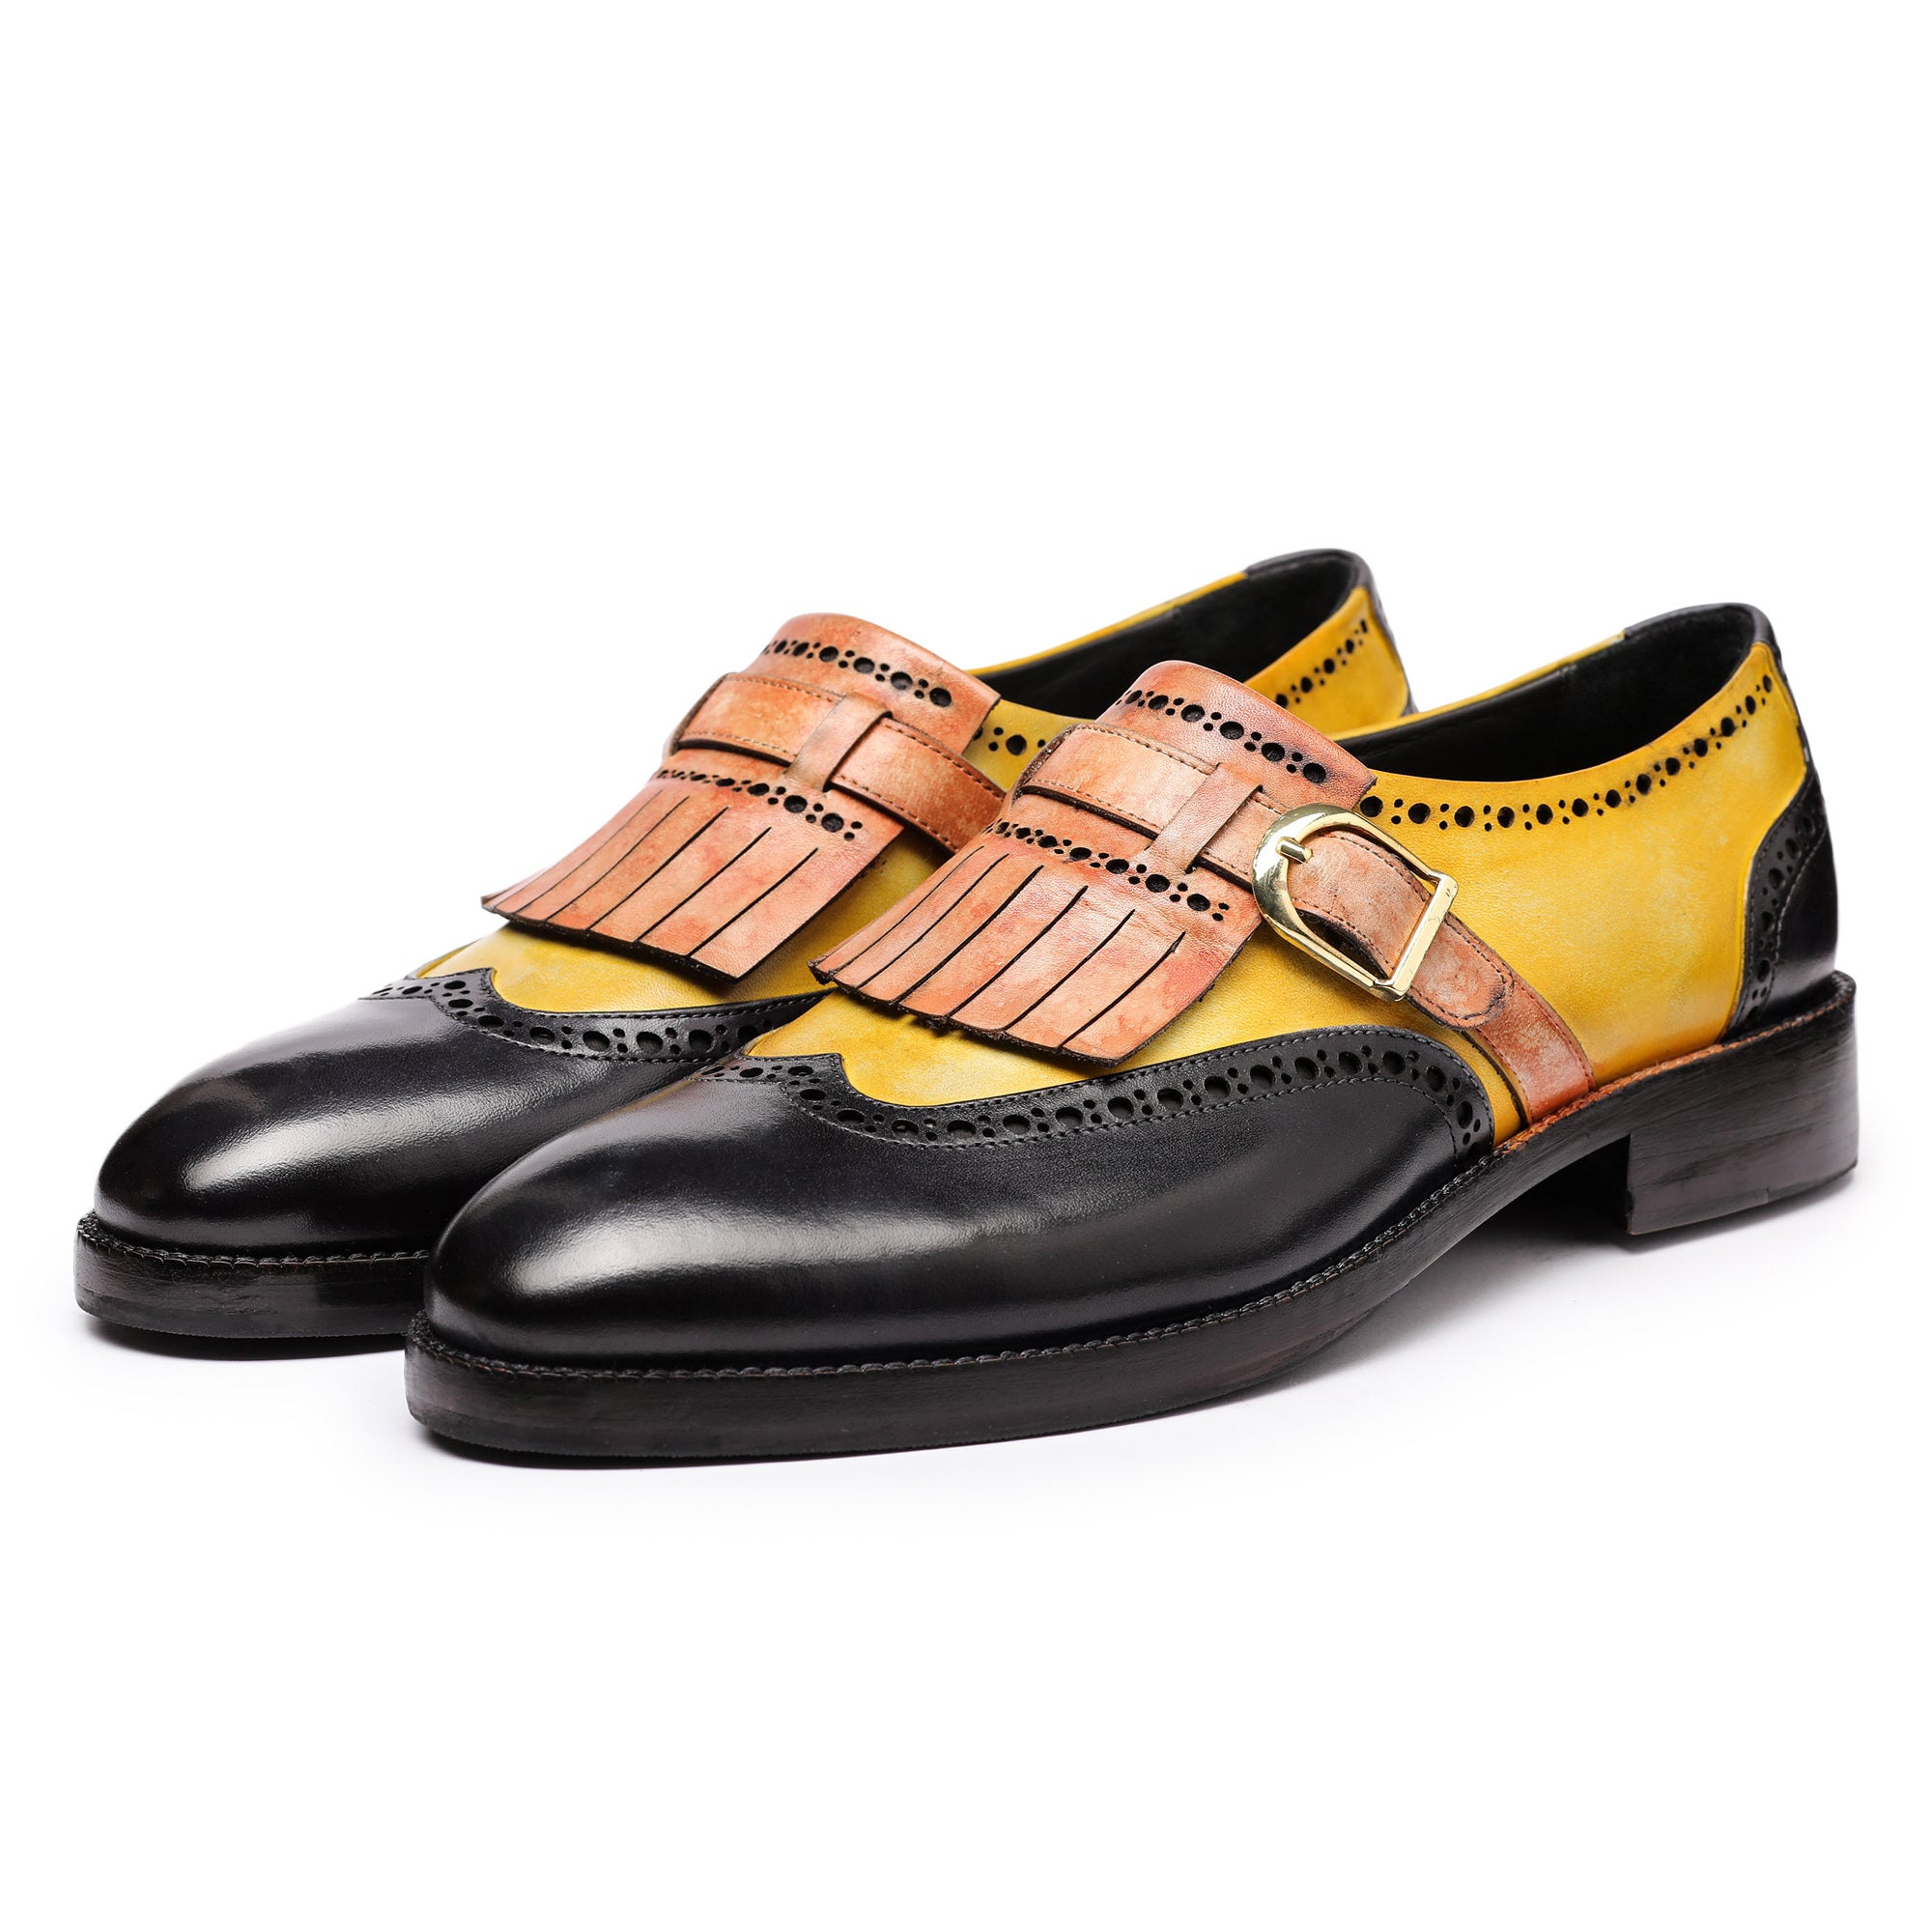 Burberry Men's Wingtip Oxford Shoes